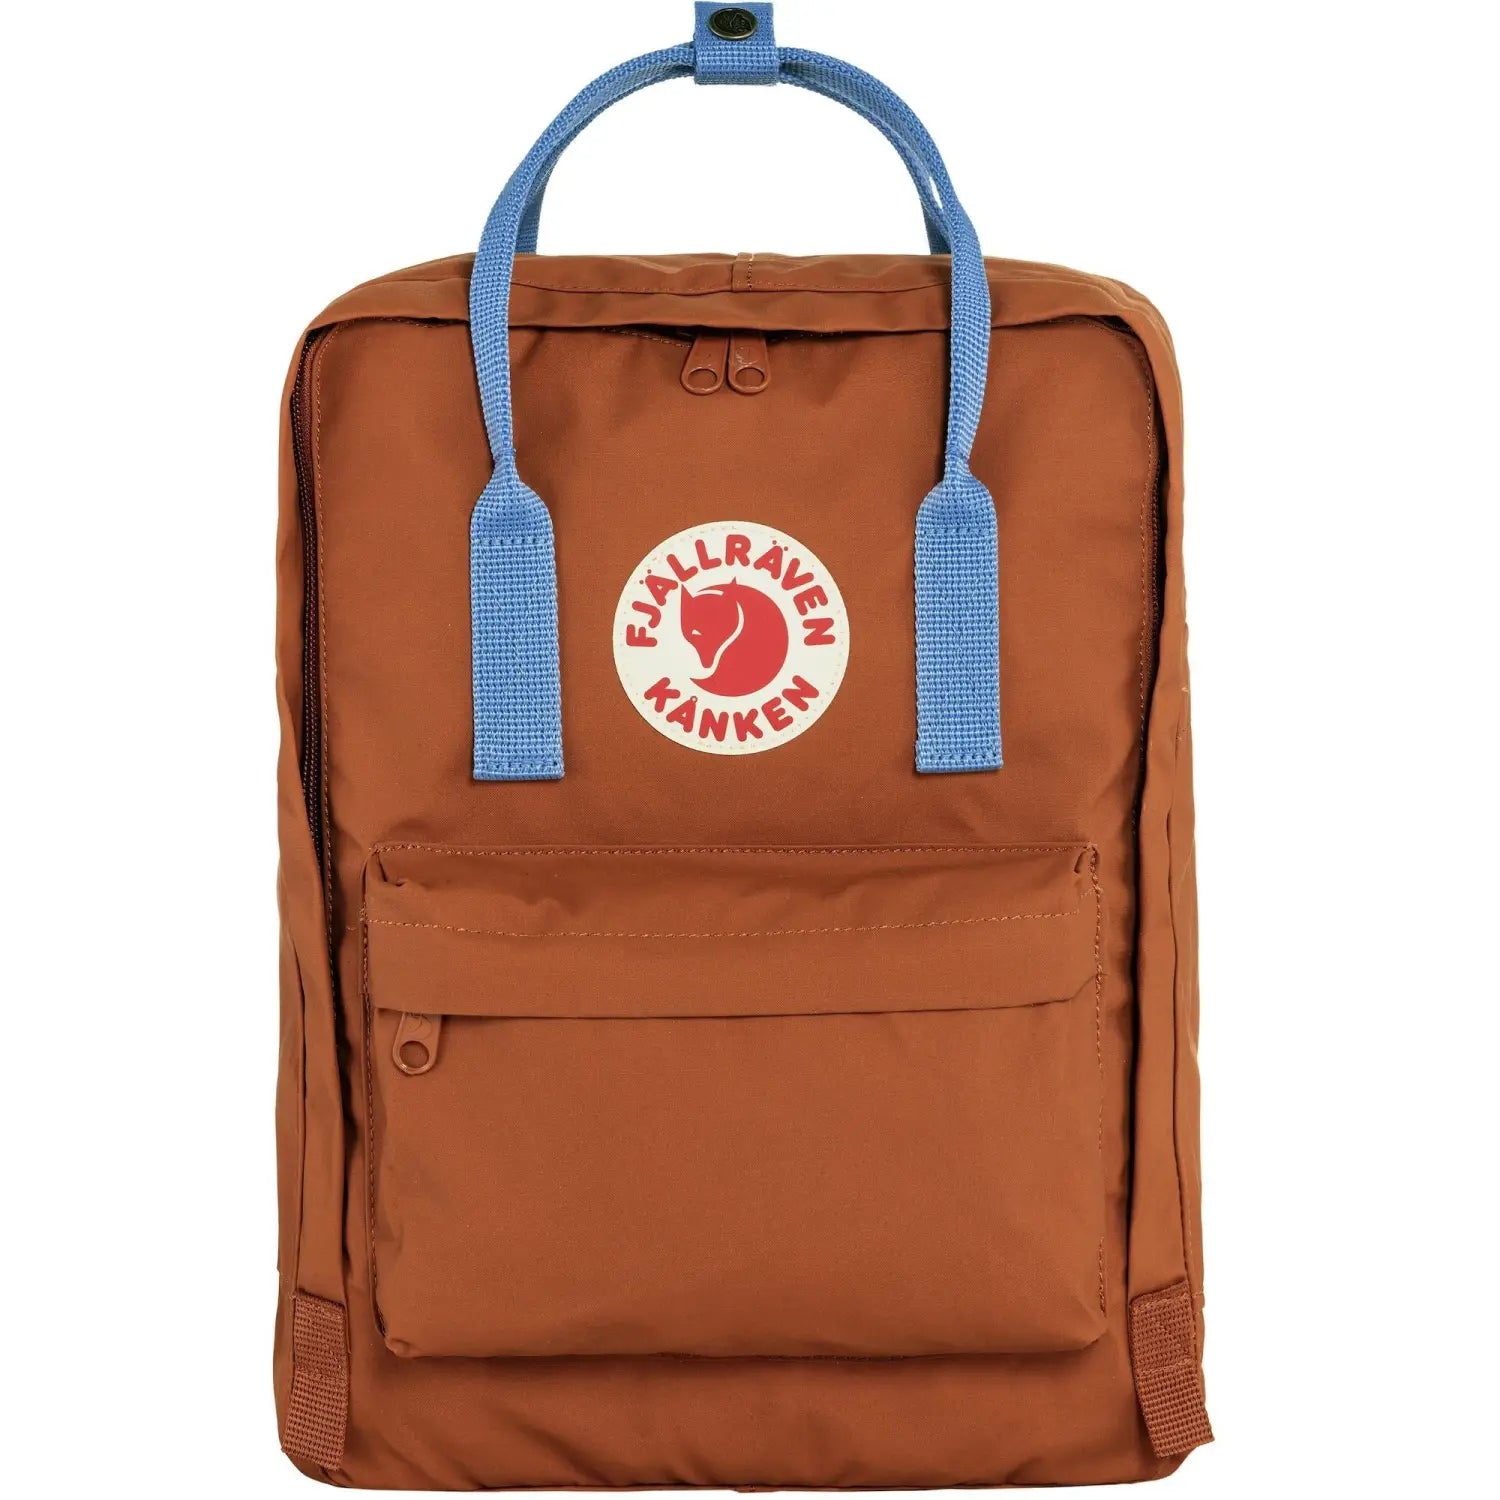 Fjallraven Kanken Backpack, terracotta brown color, with ultramarine blue straps, front view.